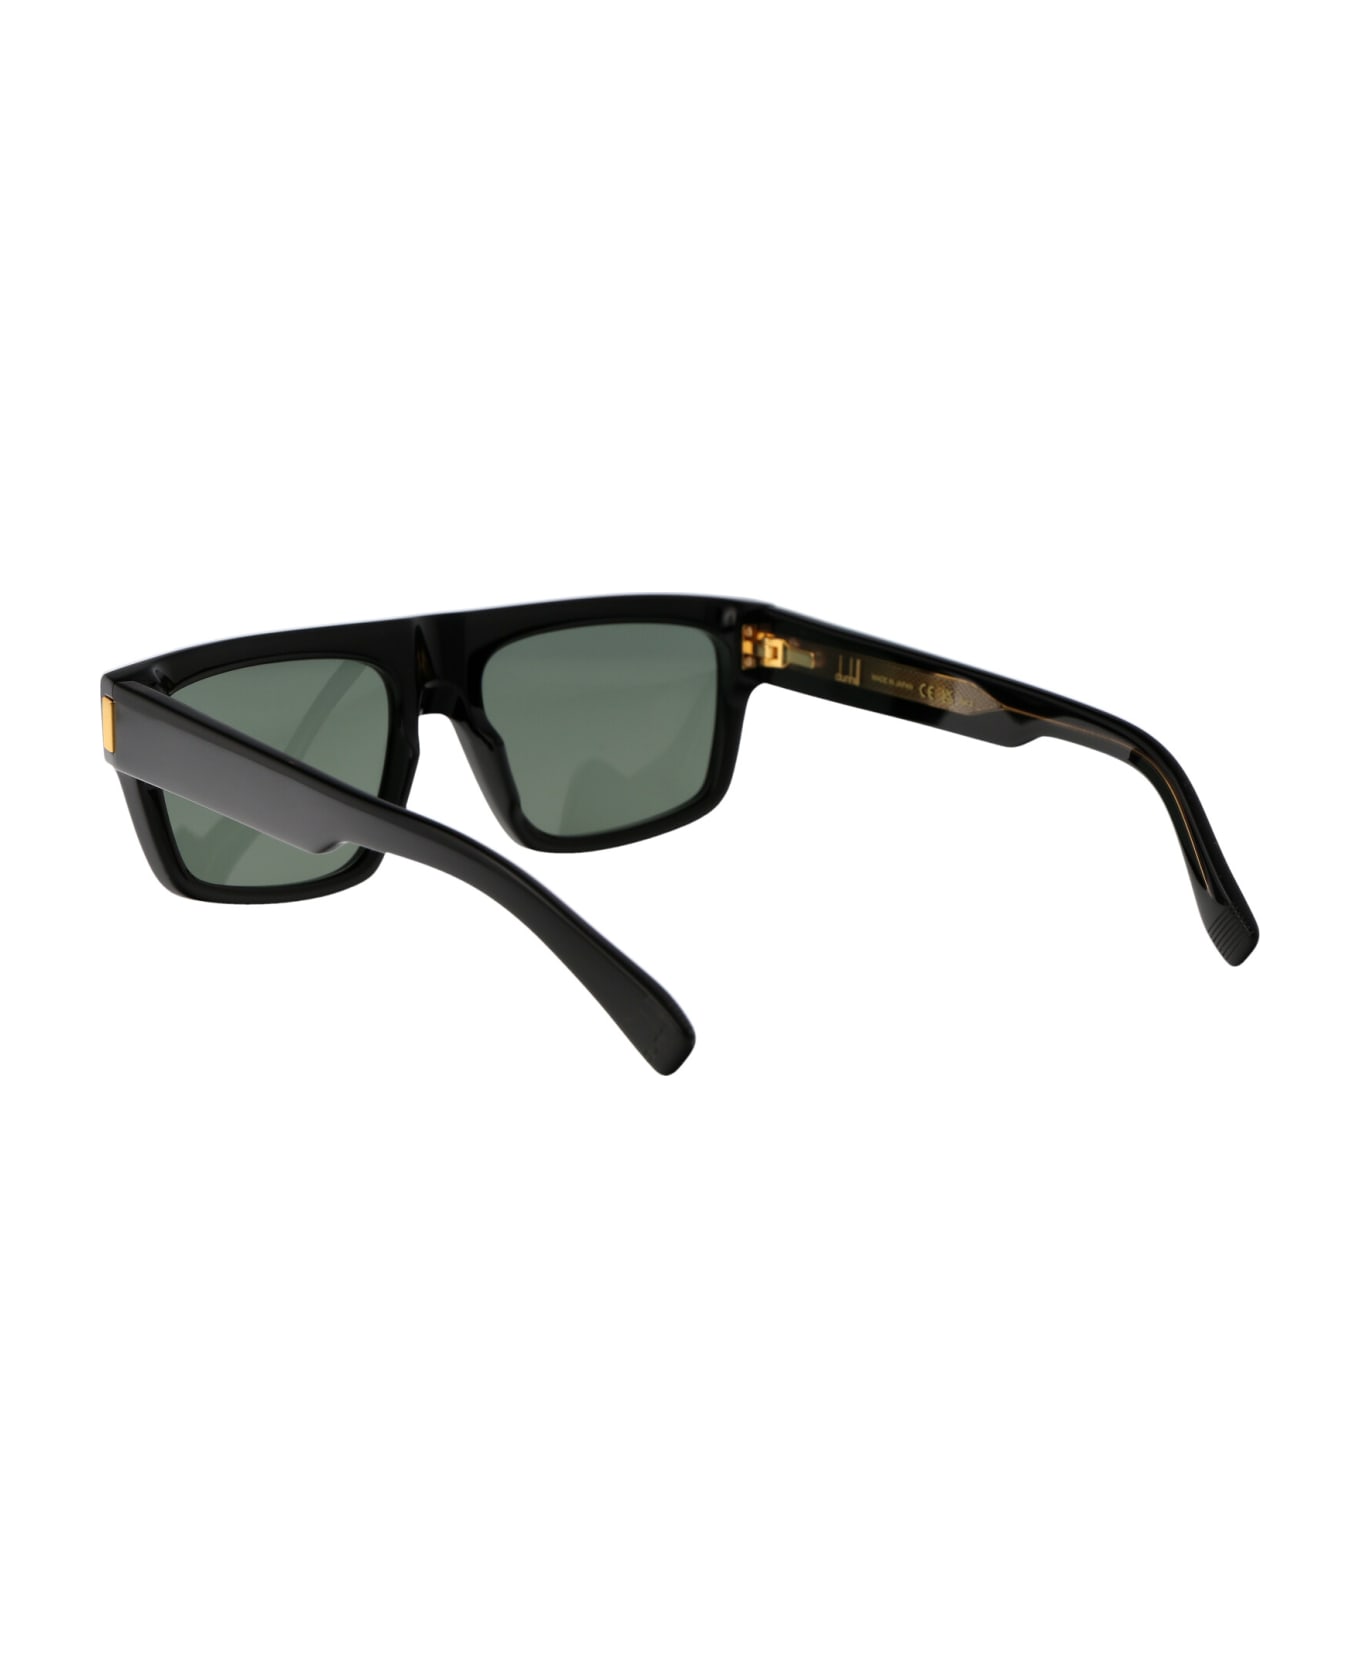 Dunhill Du0055s Sunglasses - 003 BLACK BLACK GREEN